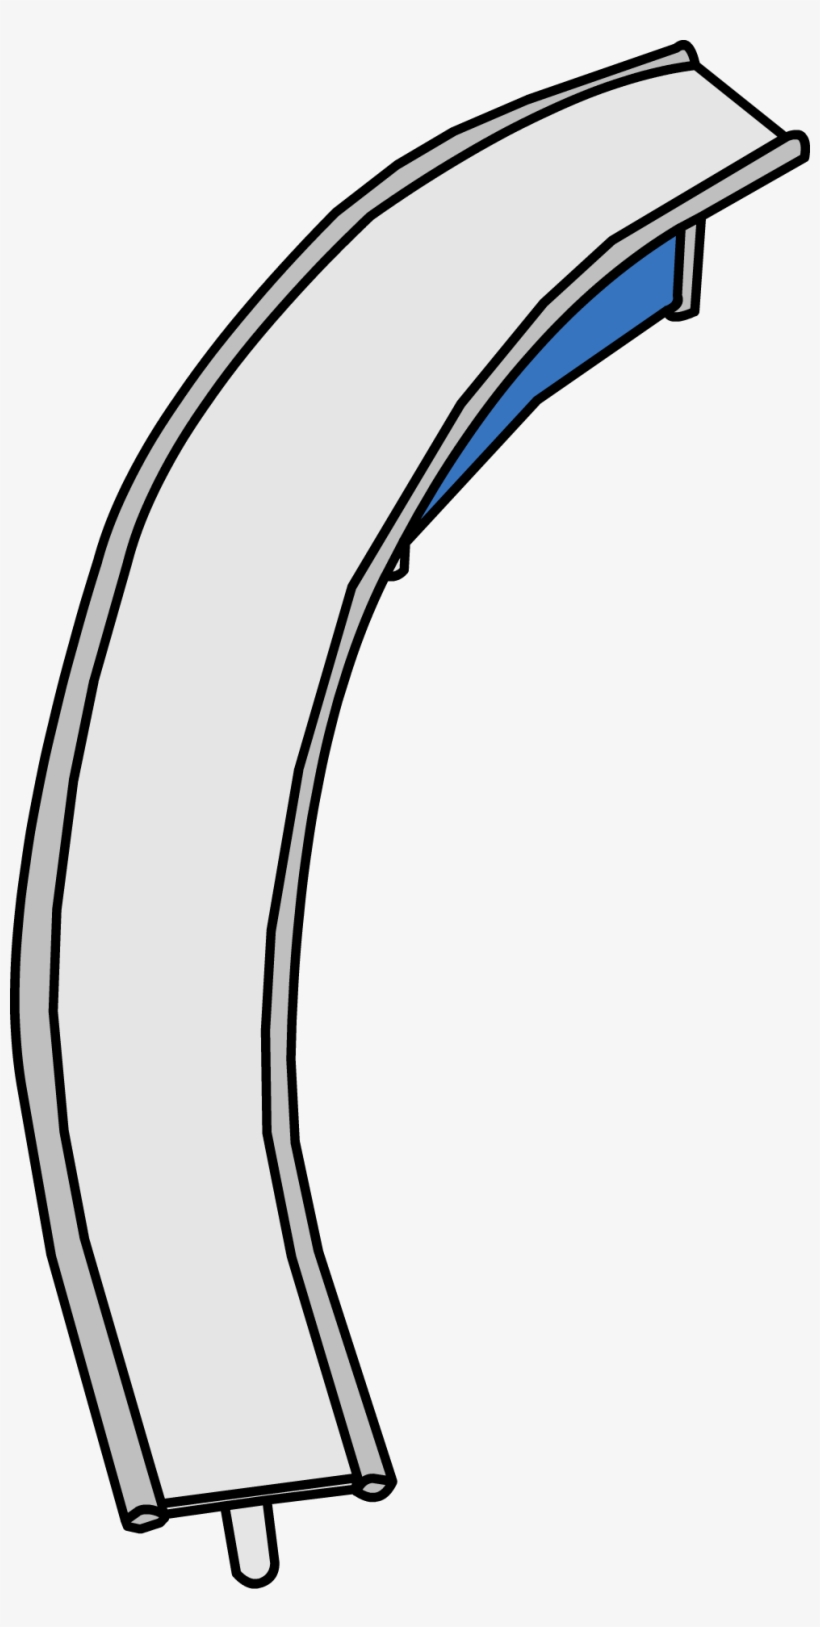 C Curve Ramp Sprite 001 - Line Art, transparent png #3007041